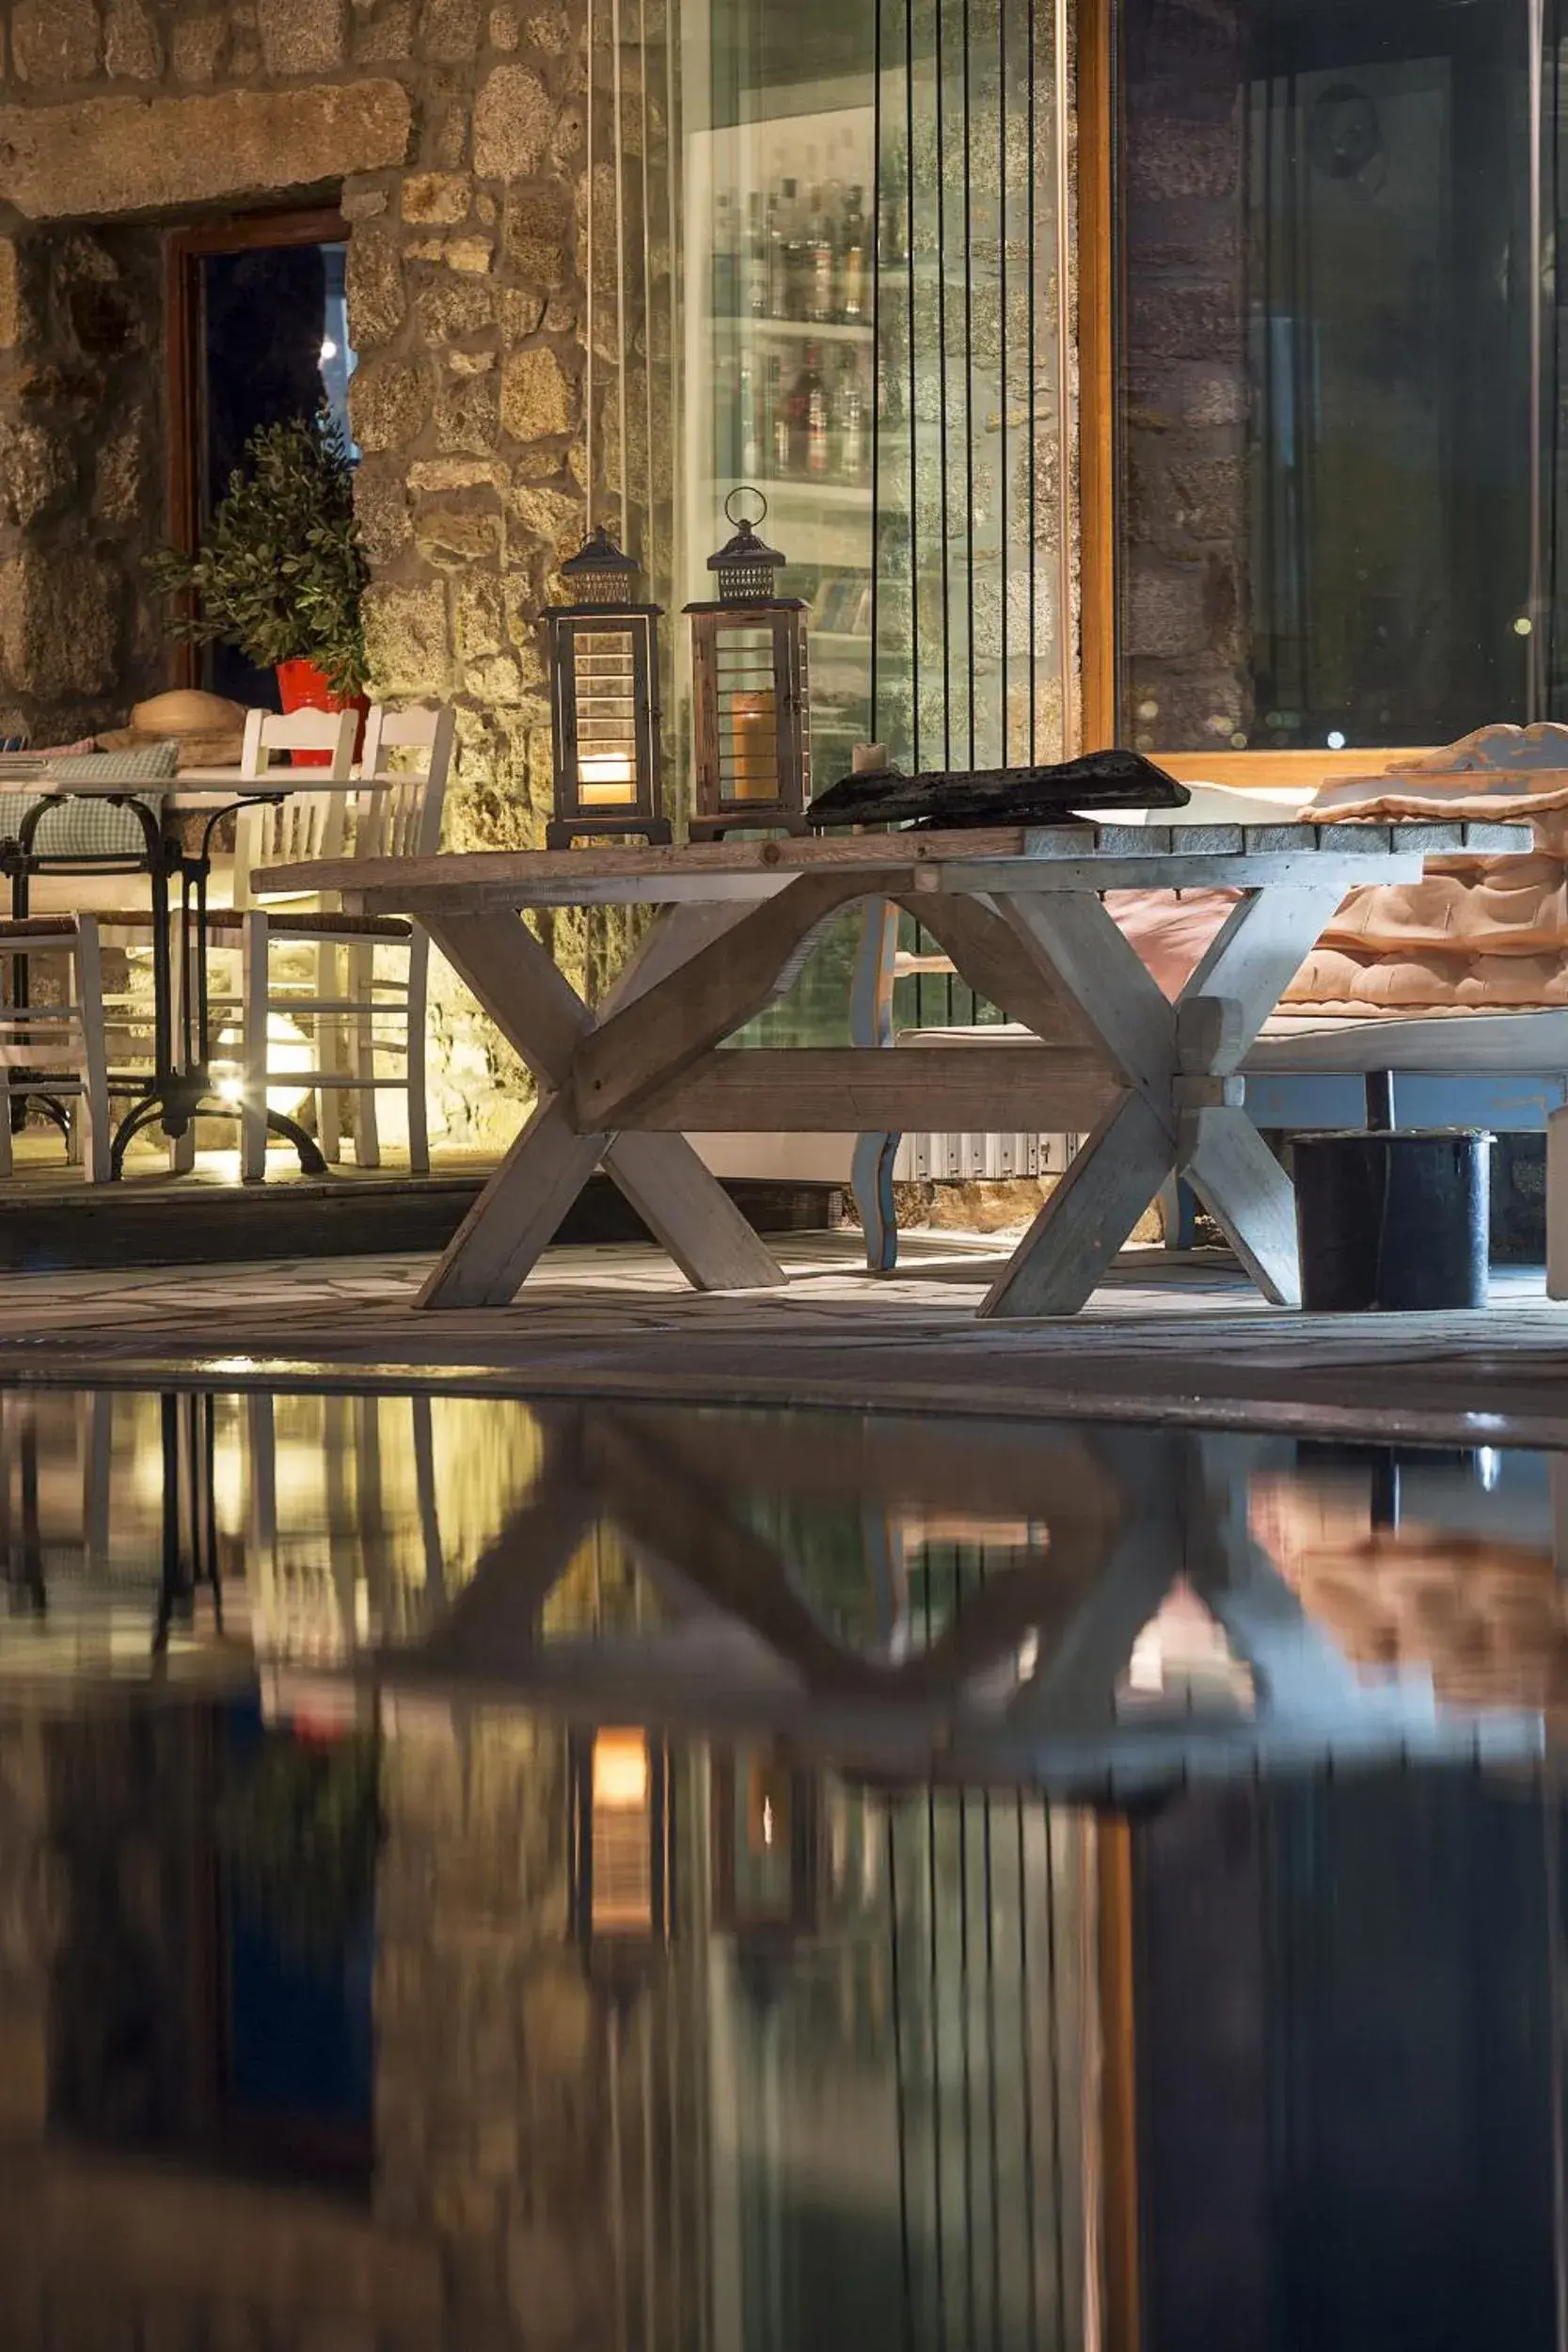 Swimming pool in A Hotel Mykonos